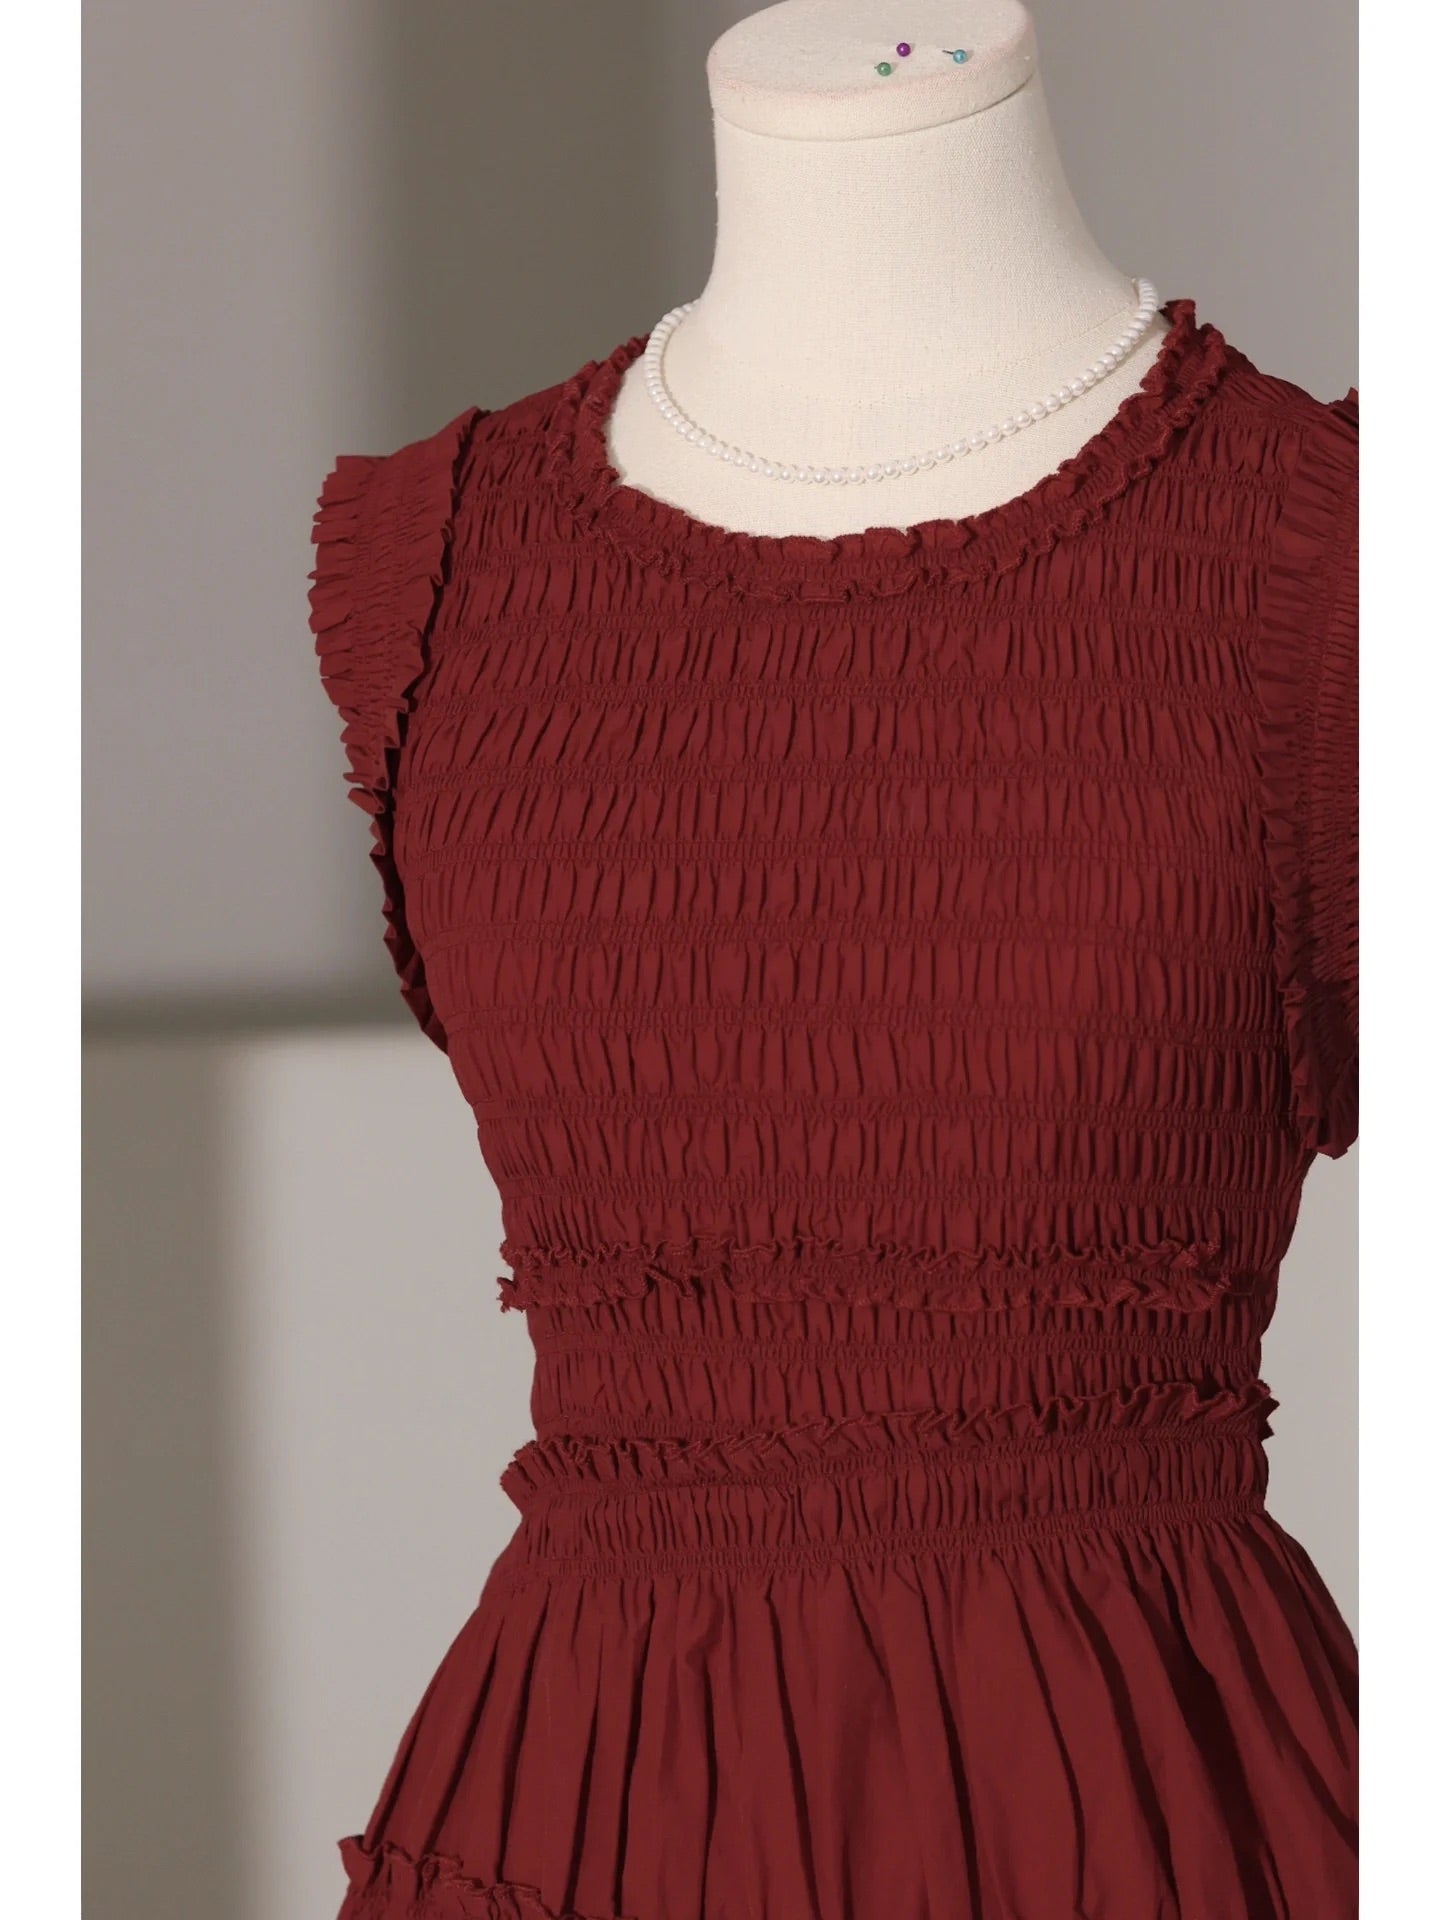 Retro Style Burgundy Sleeveless Midi Dress - DollyGown